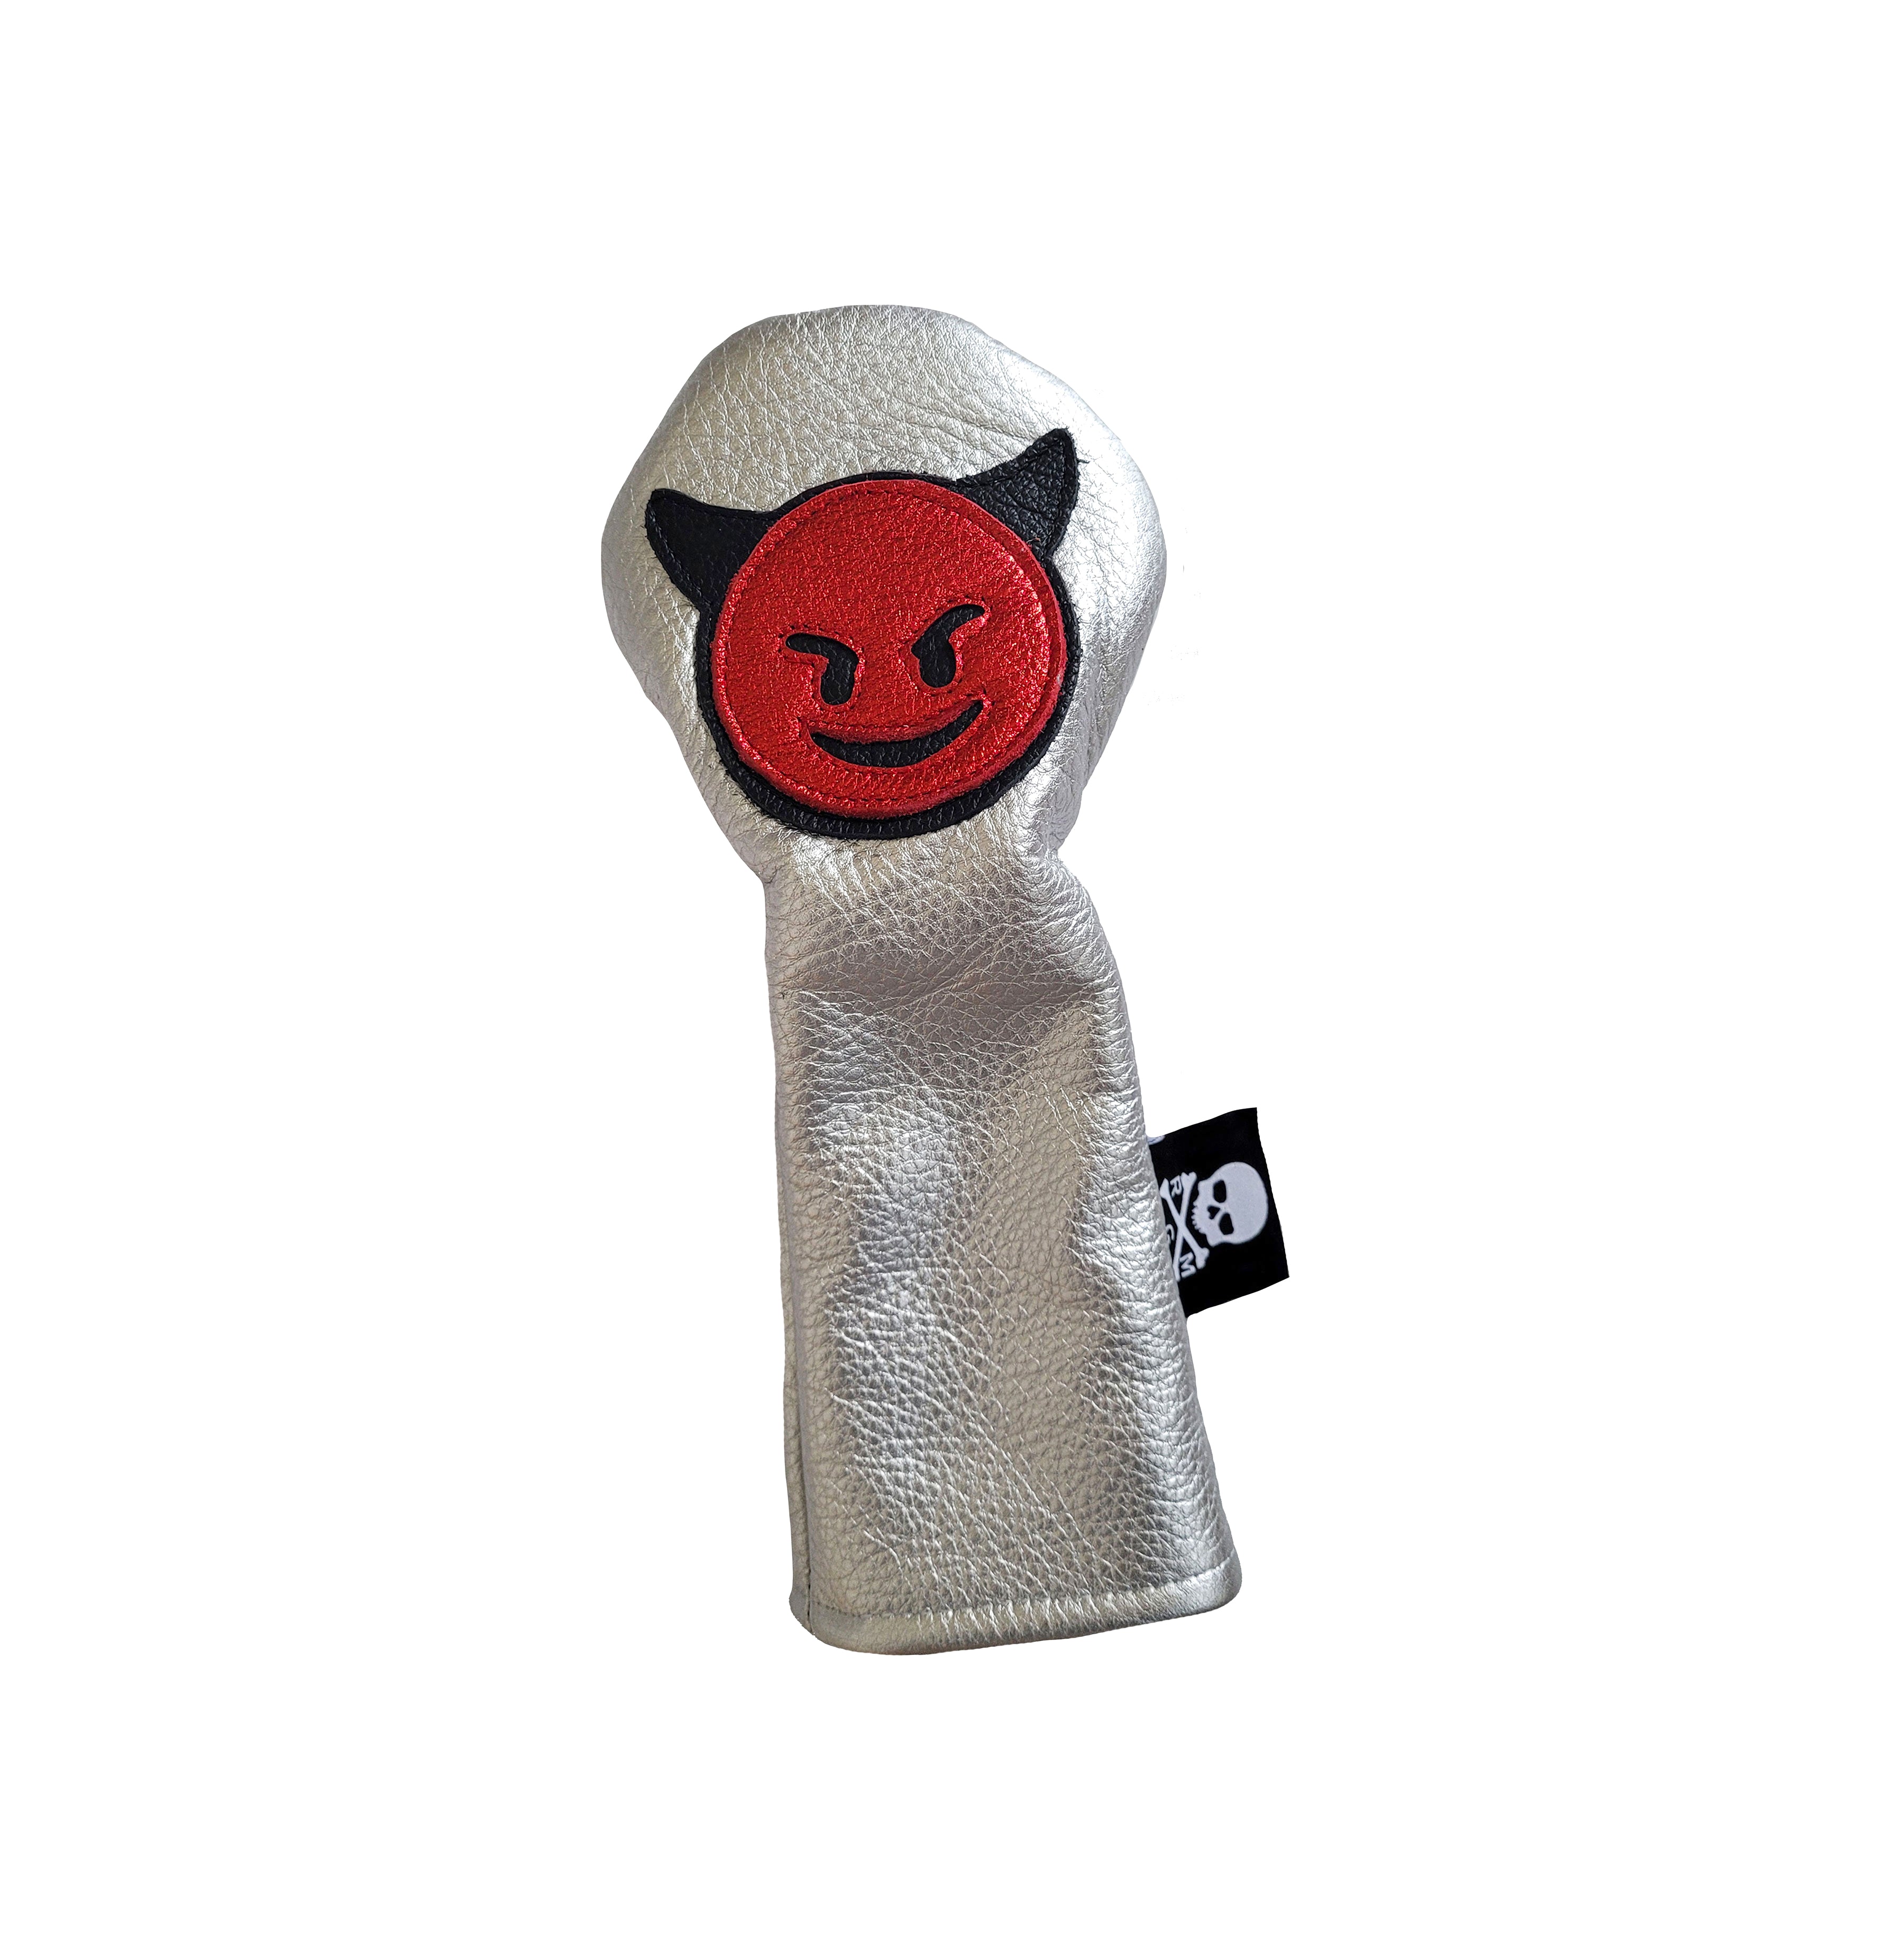 The RMG Demon Emoji Headcover - Robert Mark Golf